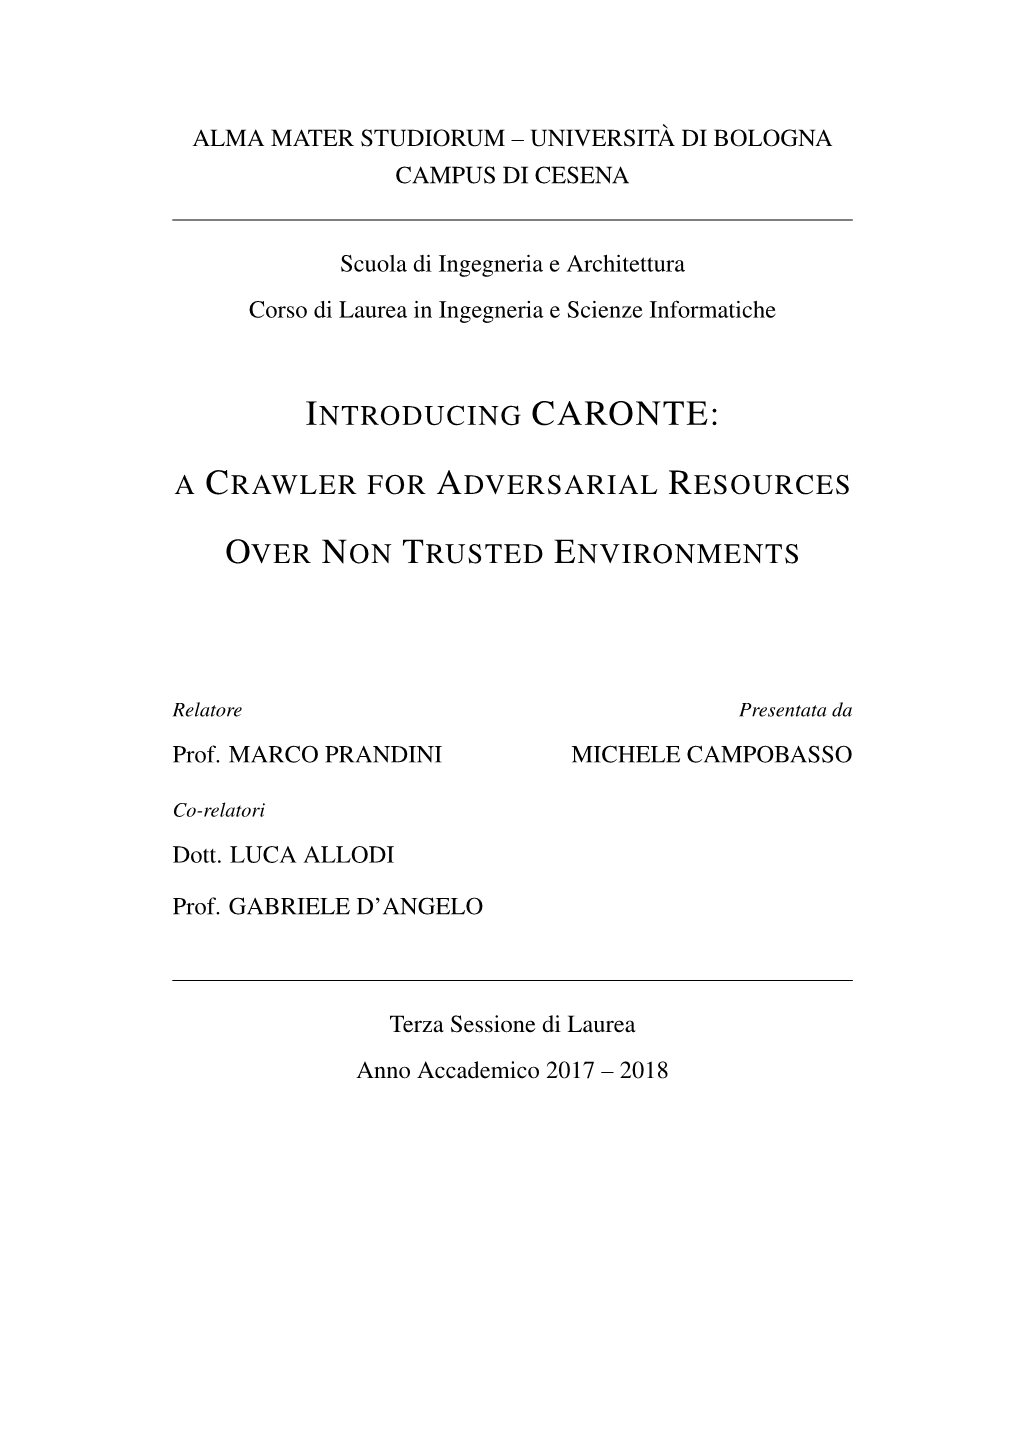 Introducing Caronte